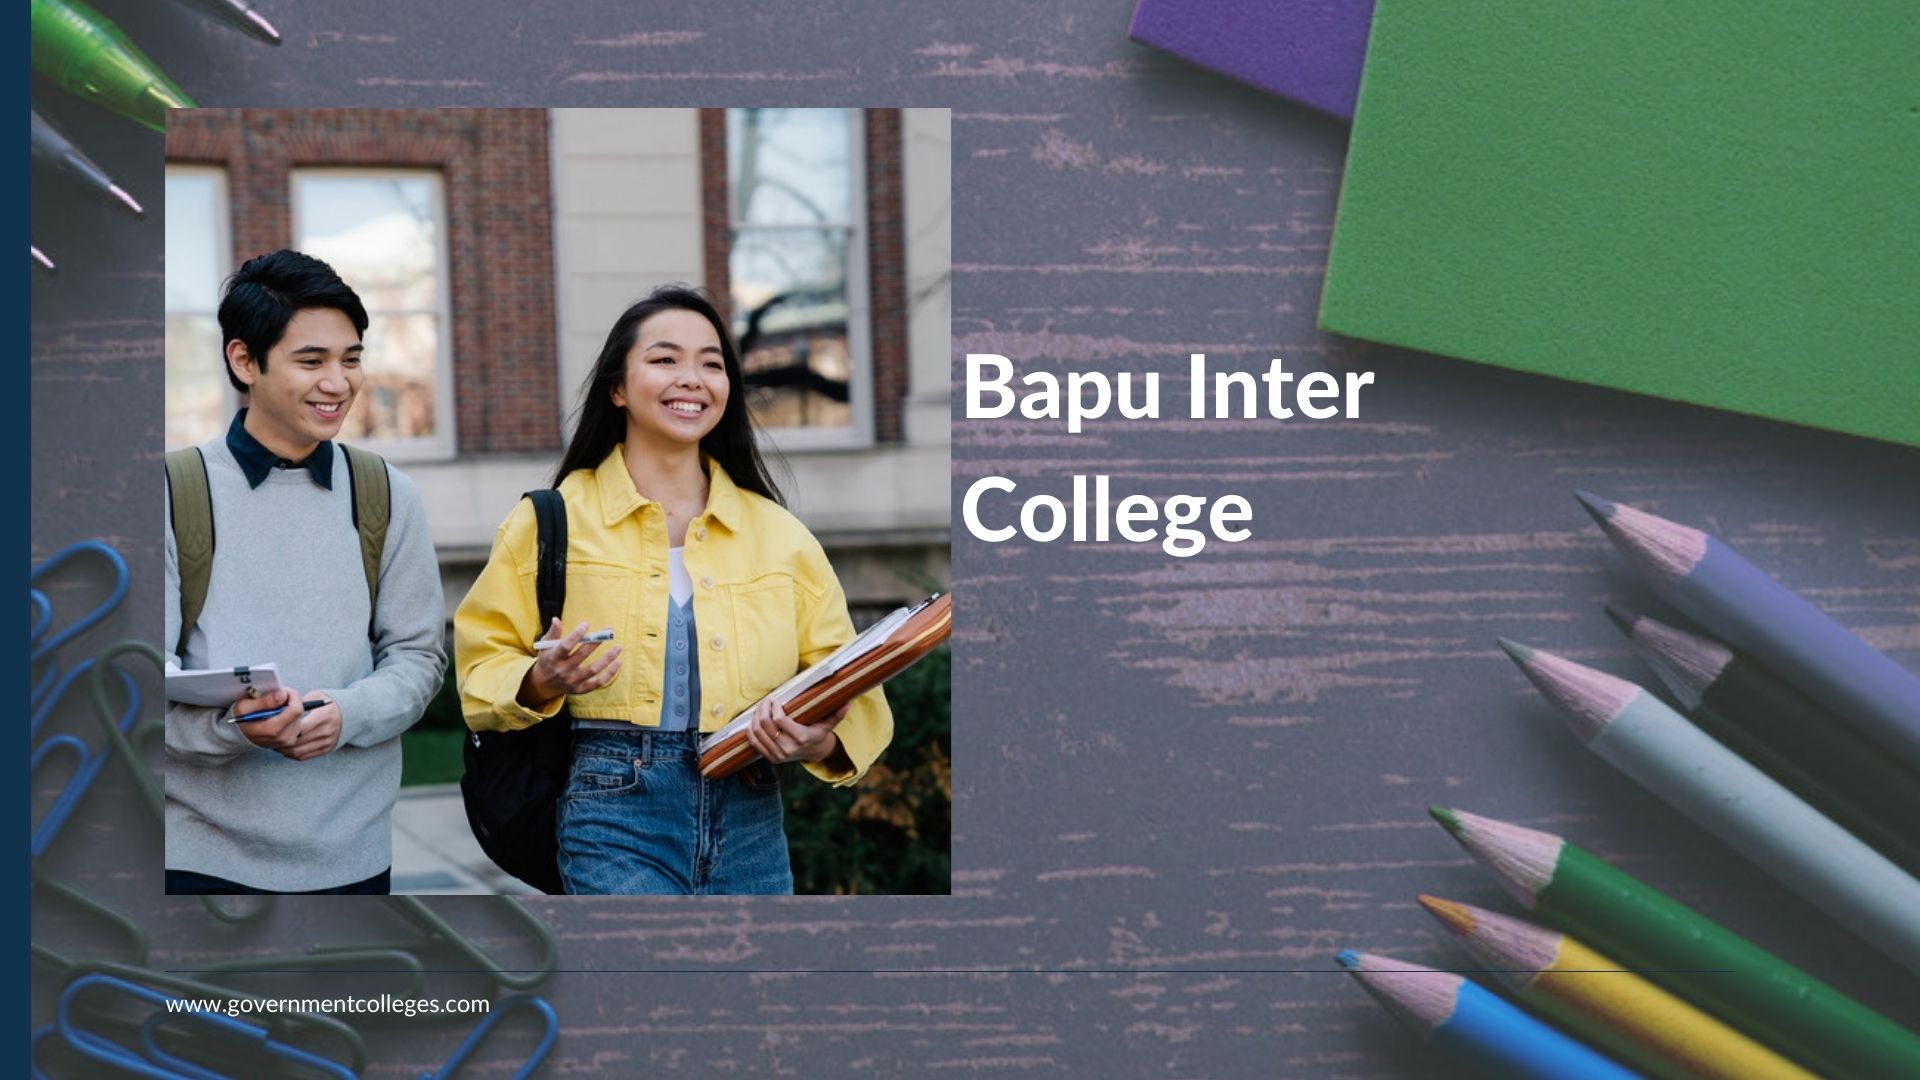 Bapu Inter College details in Hindi